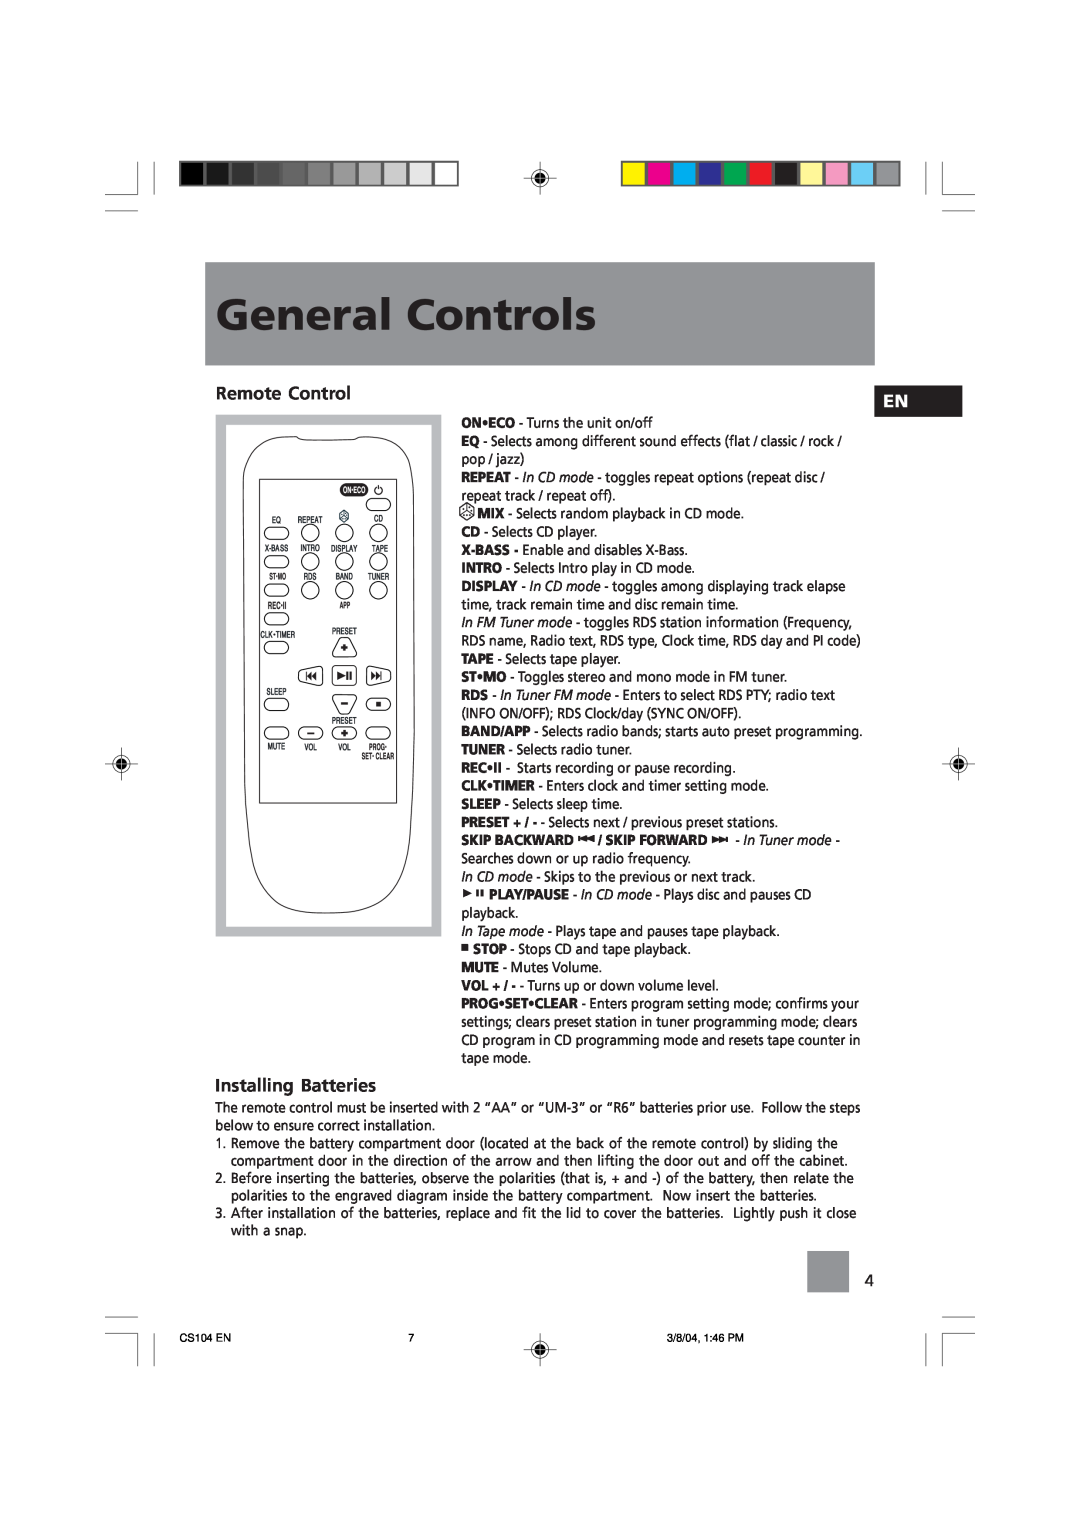 Technicolor - Thomson CS104 user service Remote Control, Installing Batteries, General Controls 